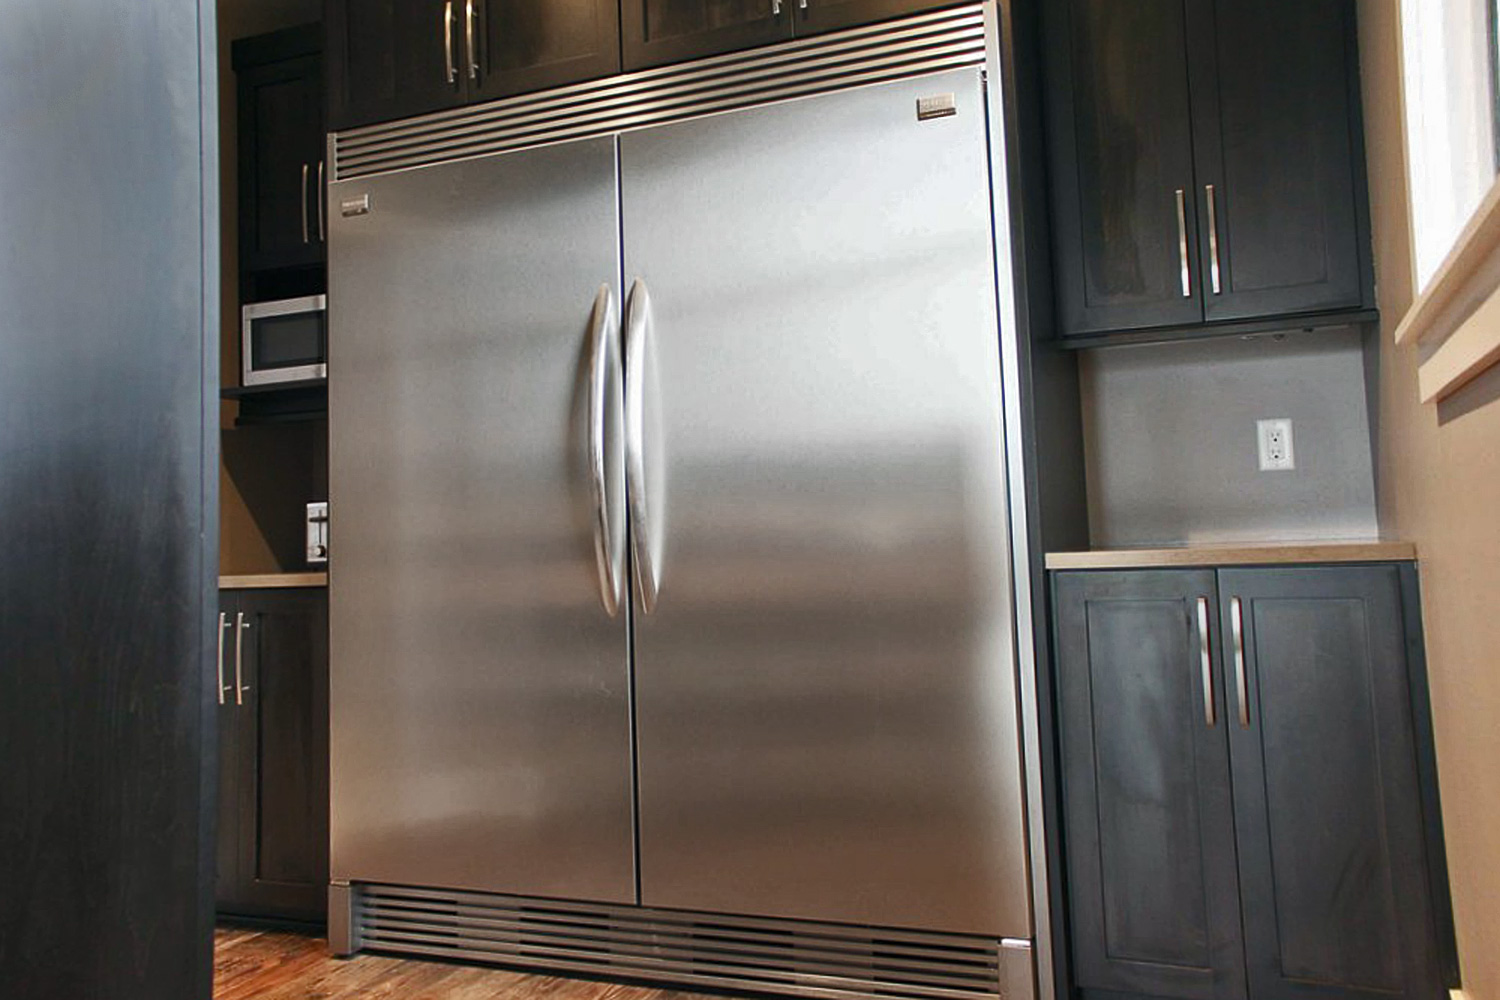 Kitchen Remodeling and Under Counter Refrigerators or Freezers — Degnan  Design-Build-Remodel